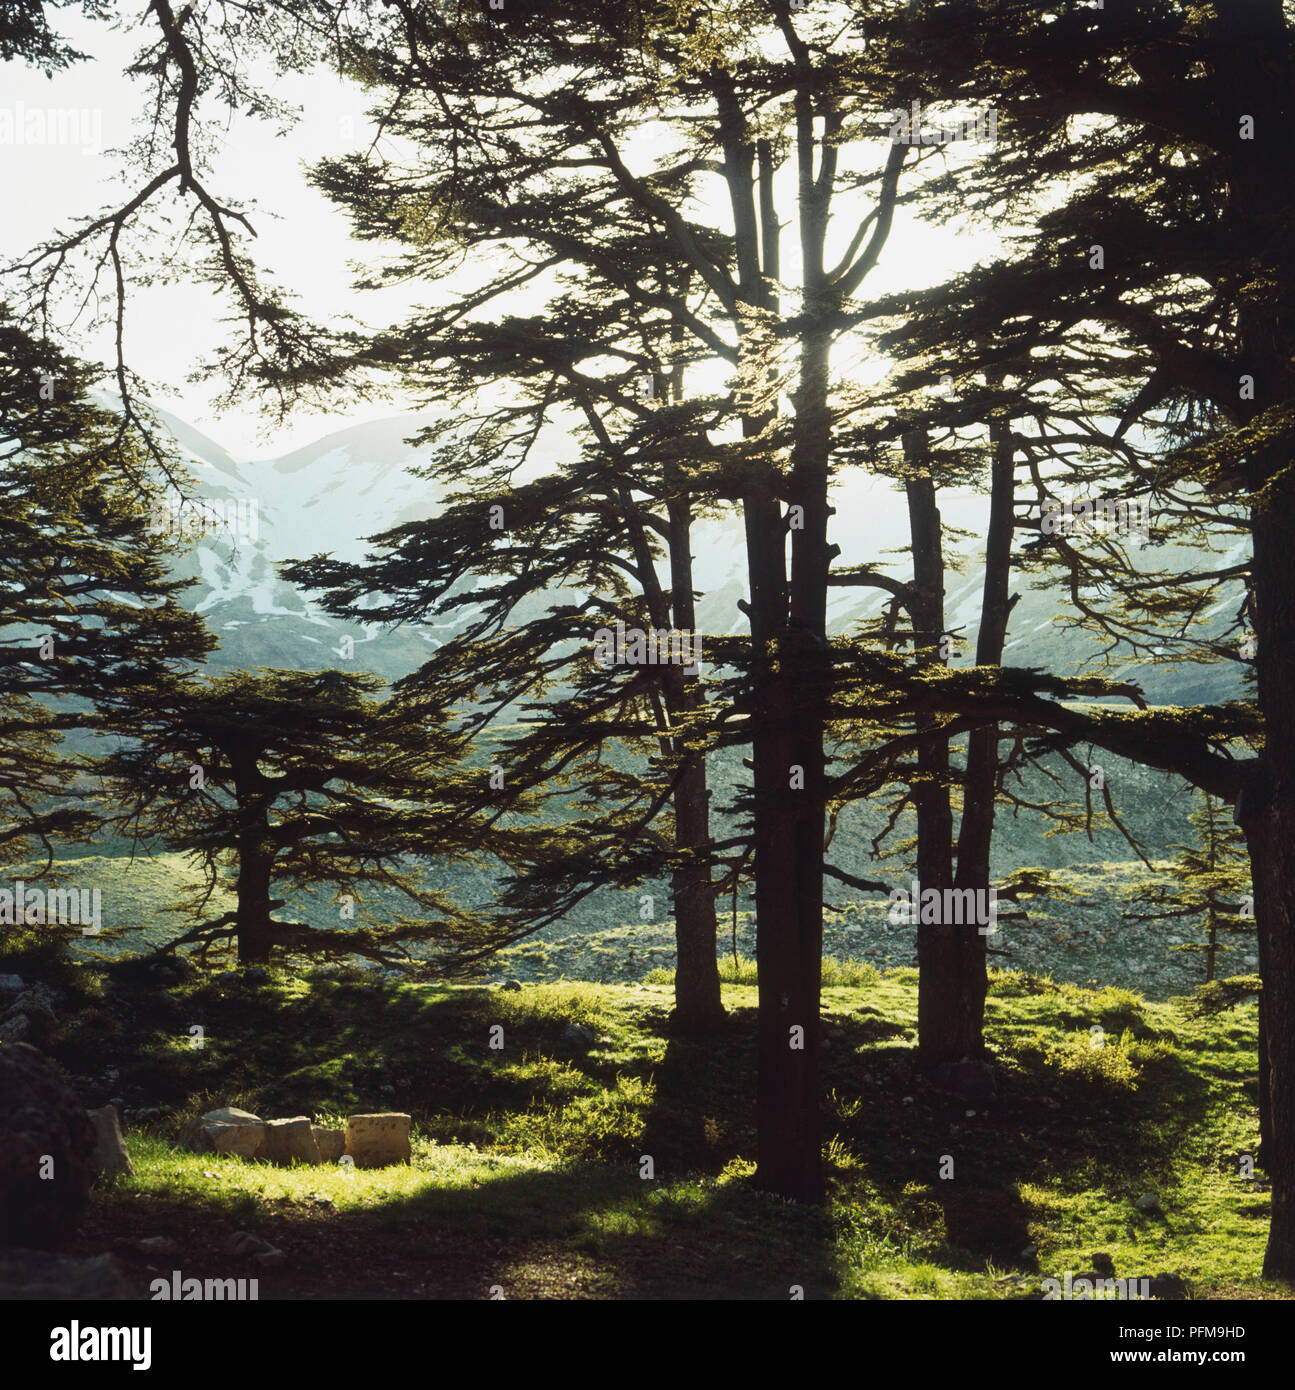 Lebanon, view through forest of Cedrus libani, Cedar trees, with Jabal al-Shaykh (Mount Hermon) in distance Stock Photo